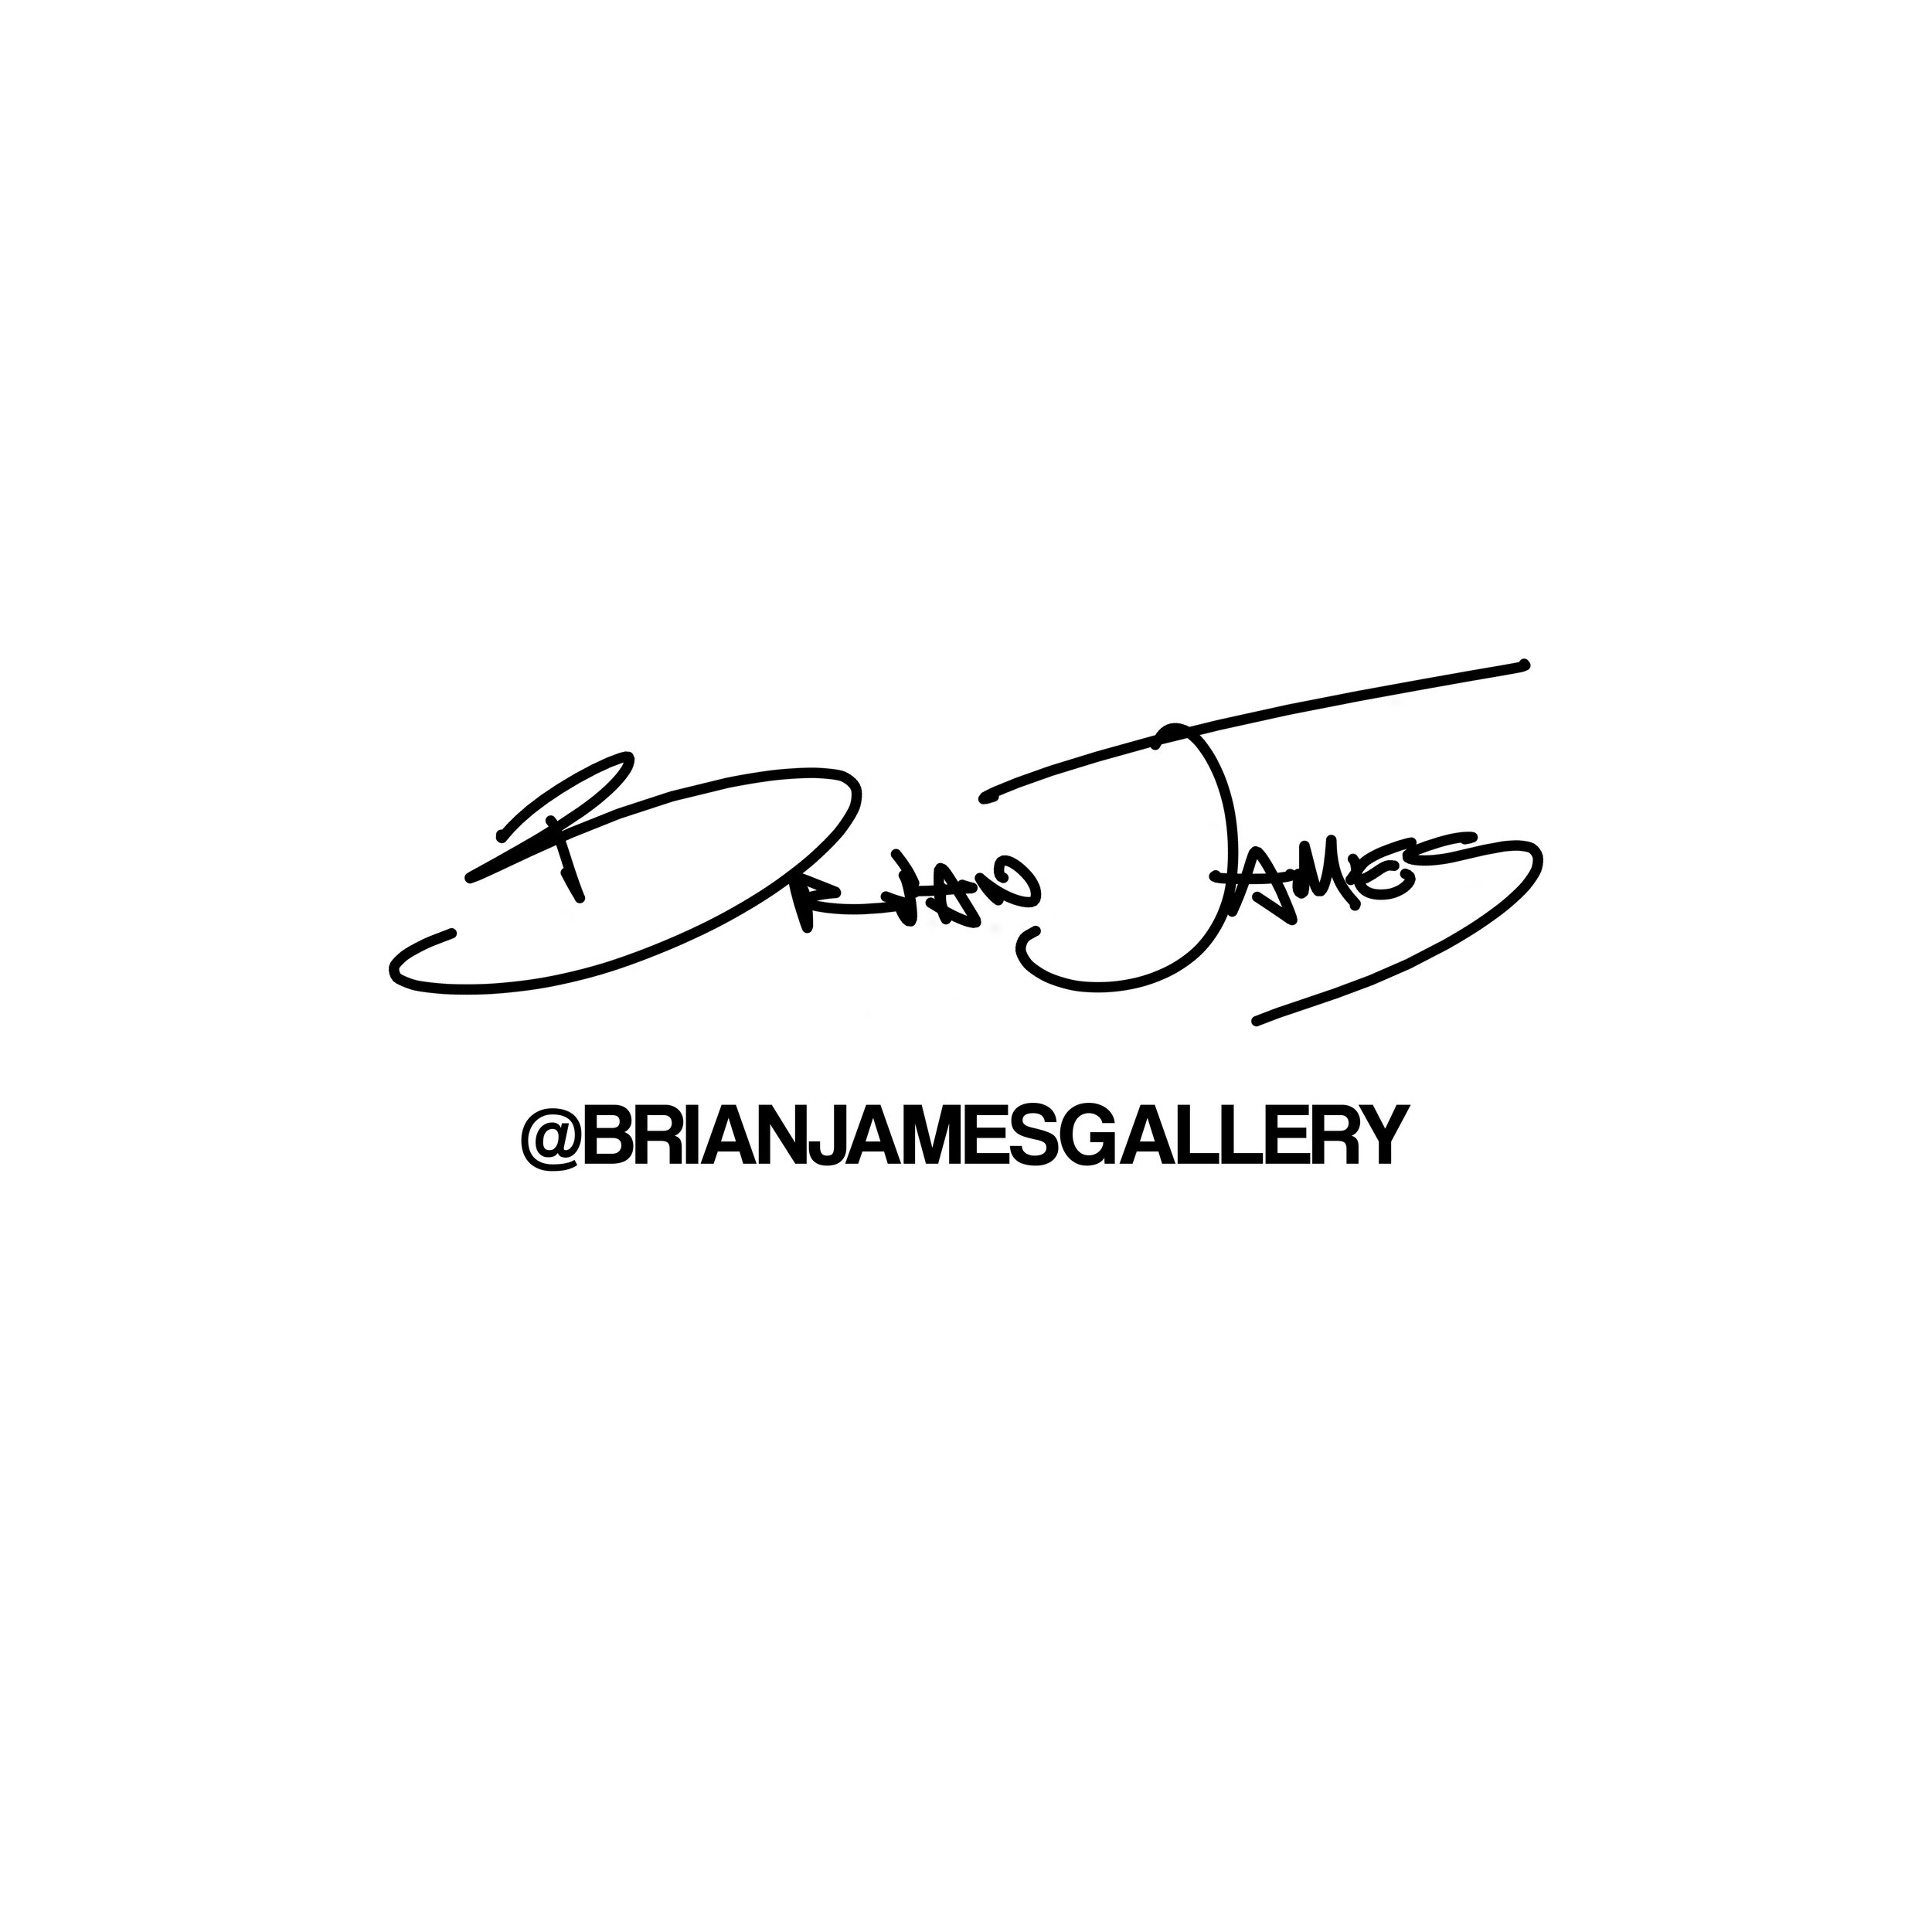 Brian-James-GALLERY-S logo.jpg